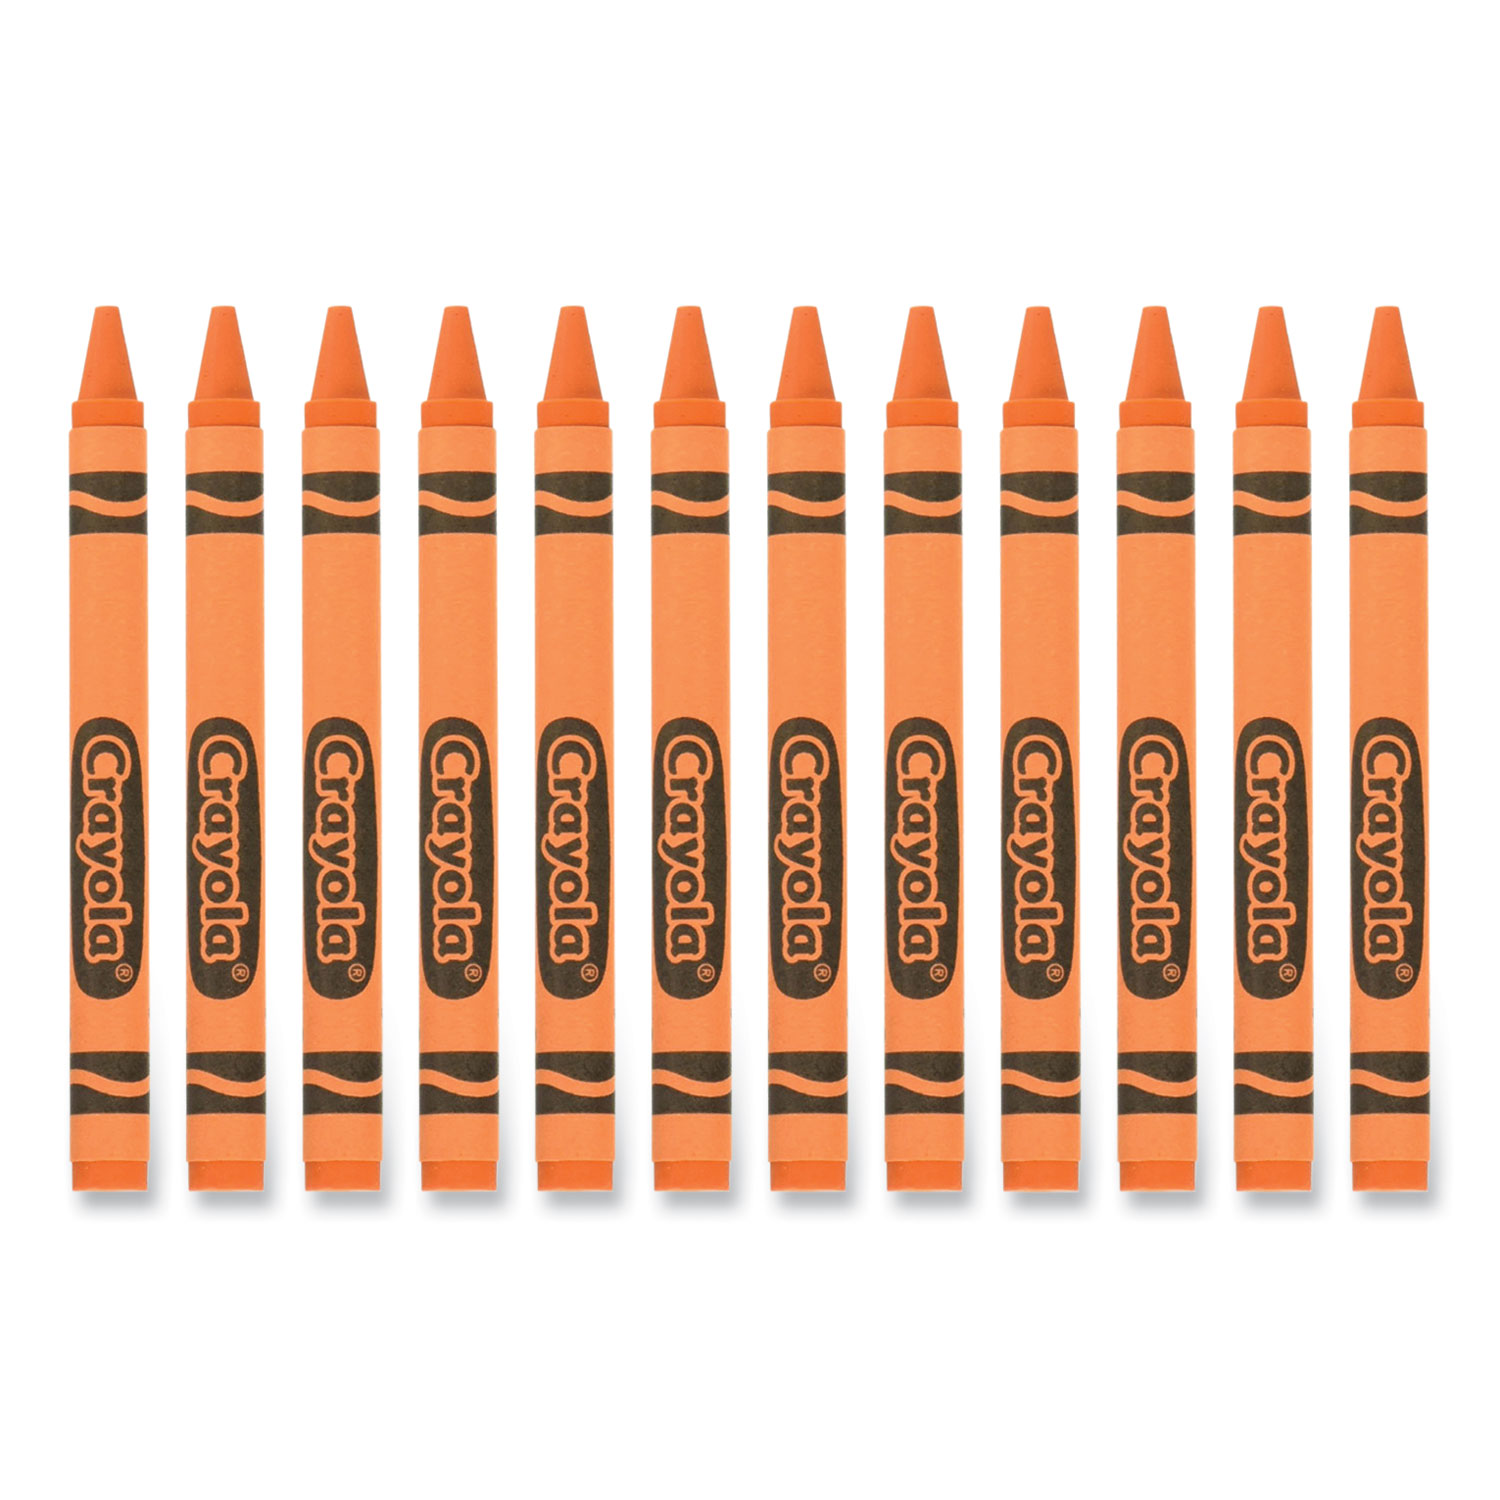 Trail maker 12 Pack Crayons - Wholesale Bright Wax Lebanon